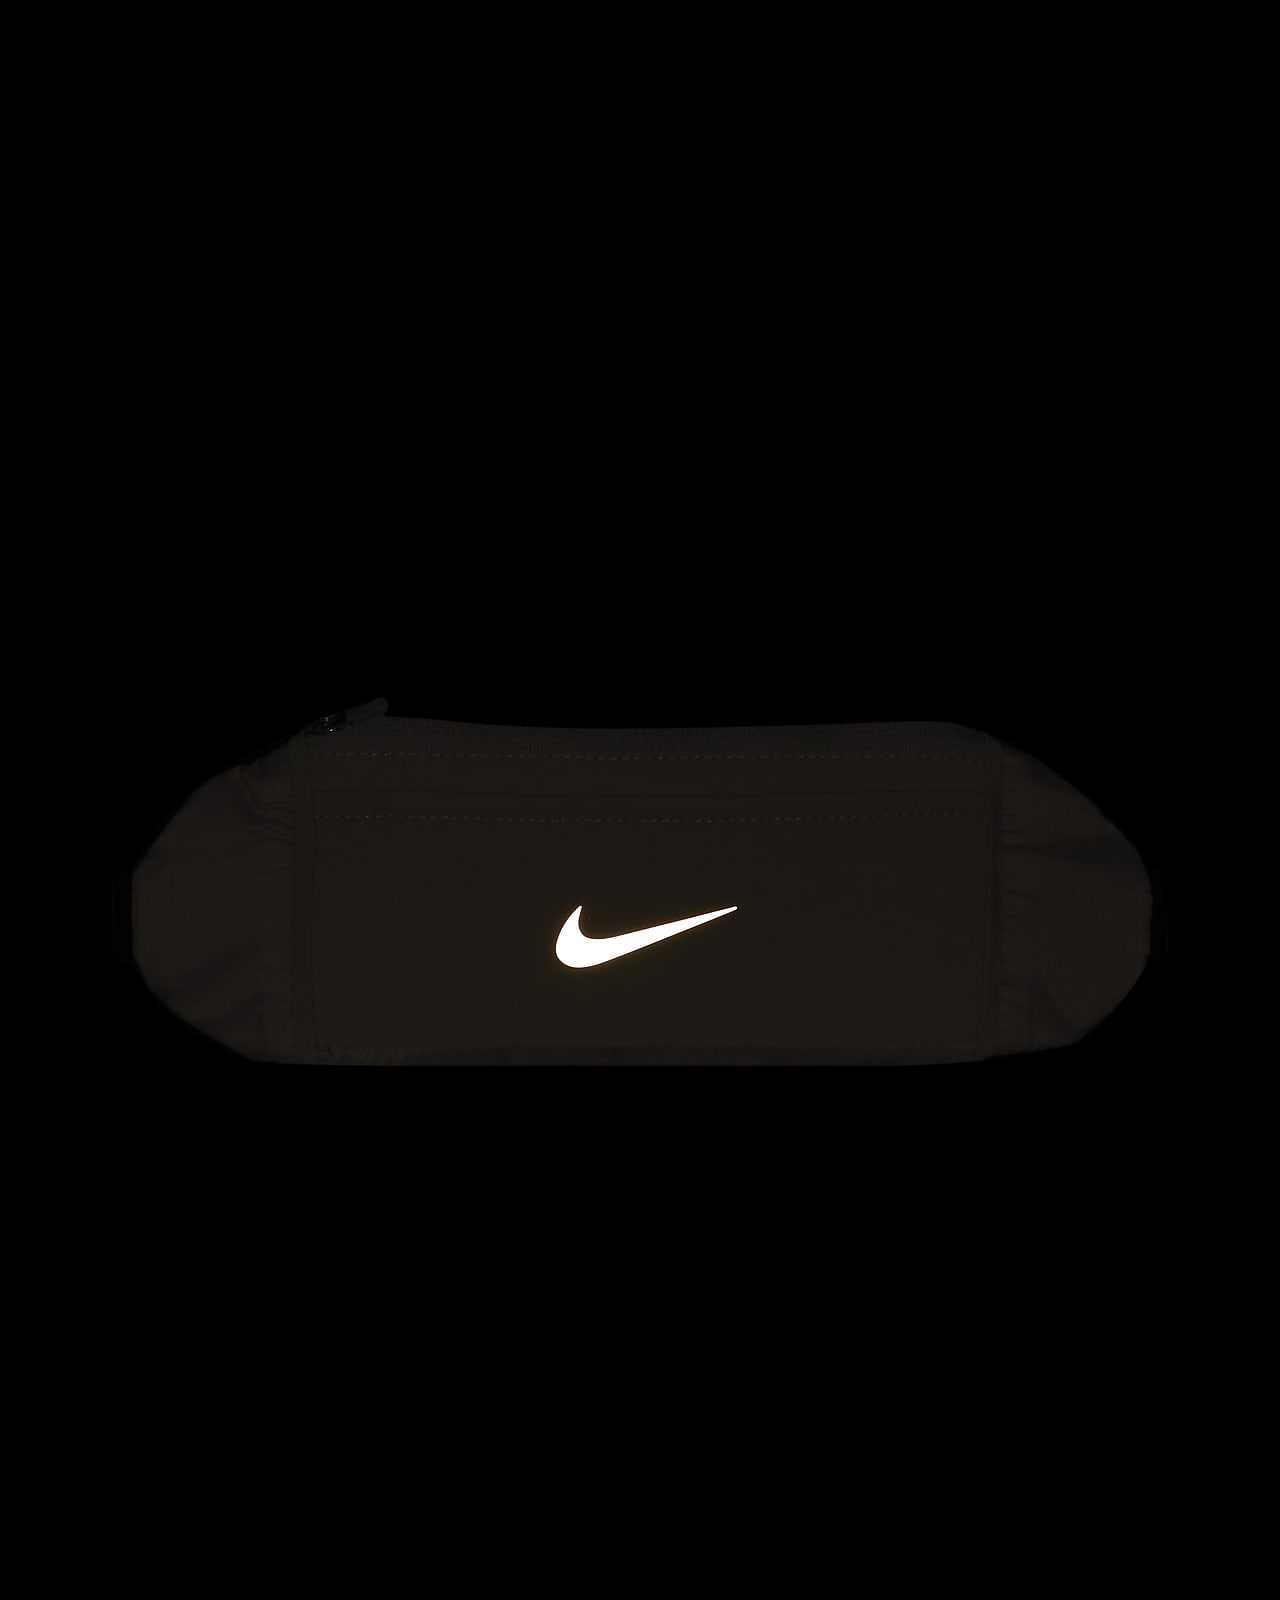 Nike公式 ナイキ チャレンジャー ランニング ファニー パック スモール オンラインストア 通販サイト